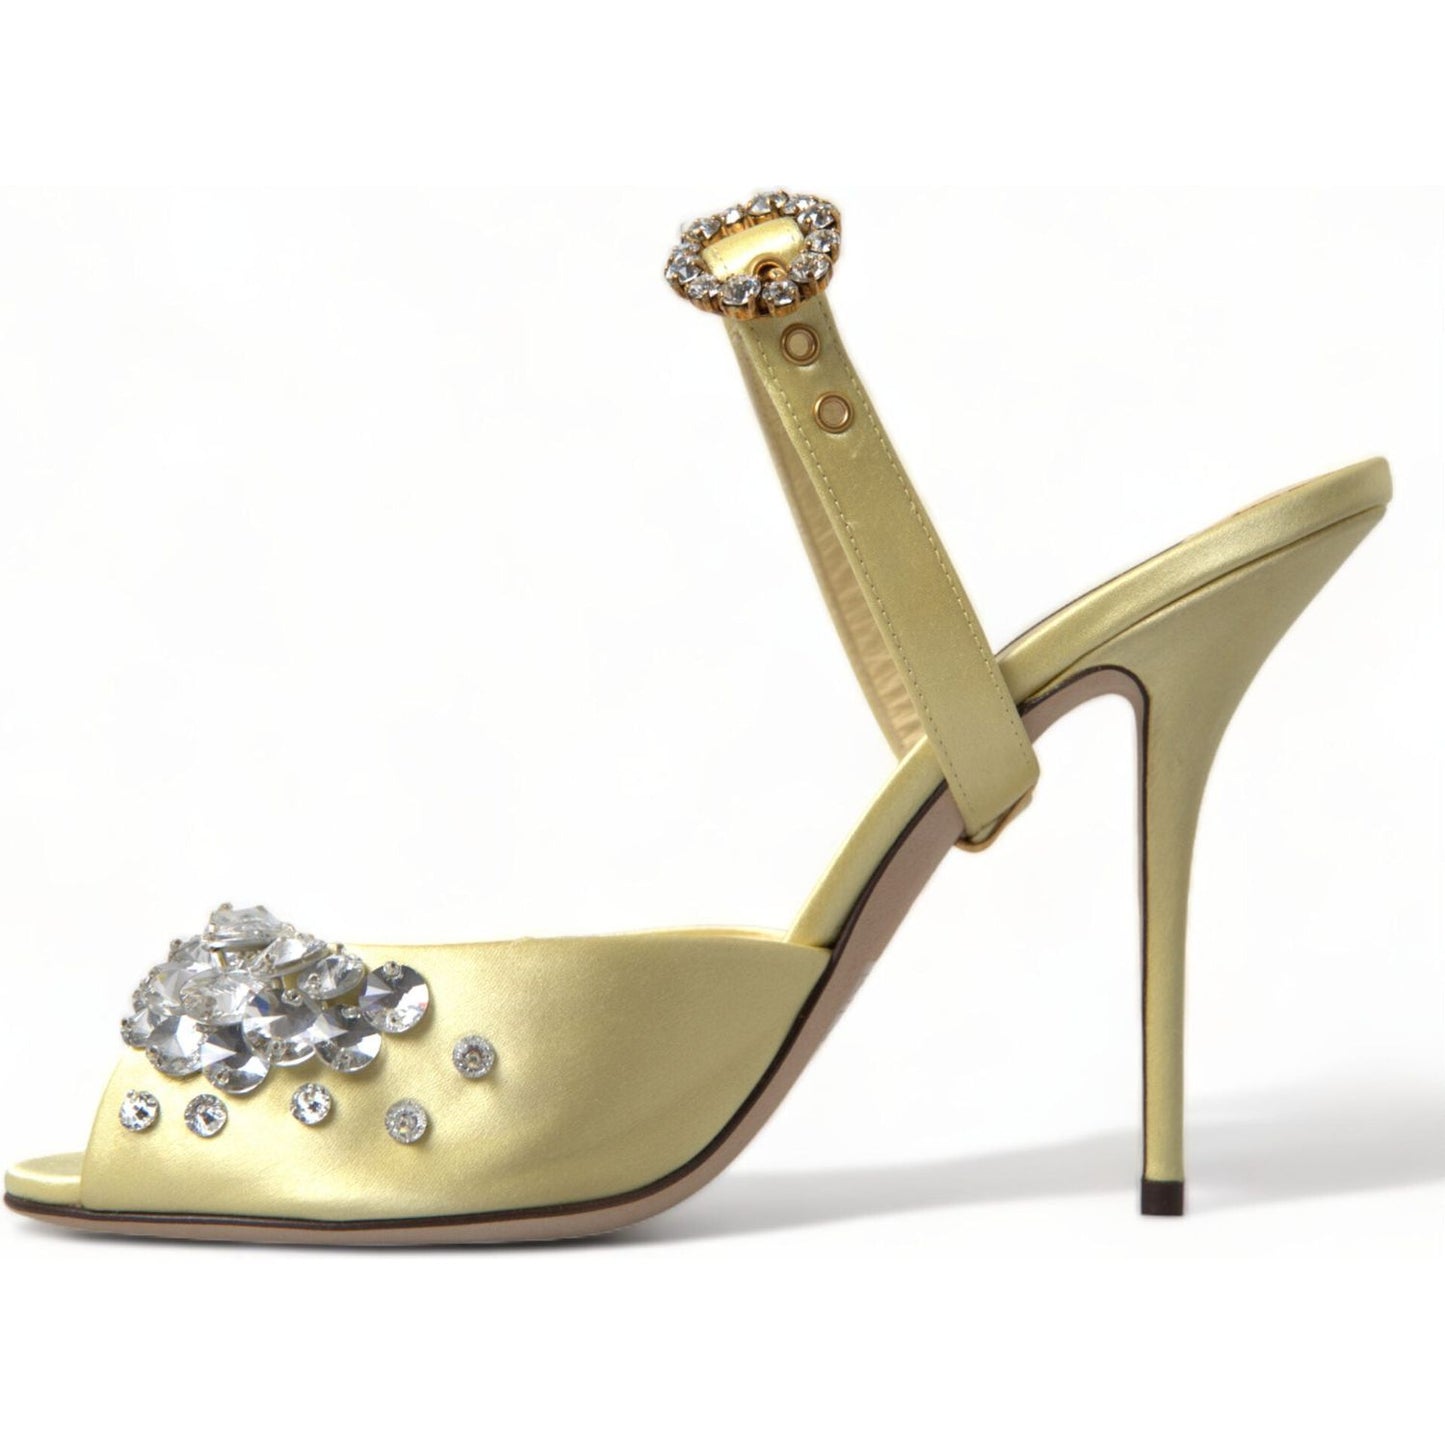 Dolce & Gabbana Crystal Embellished Silk Sandals yellow-satin-crystal-mary-janes-sandals 465A9699-bg-scaled-e5da9458-dbd.jpg